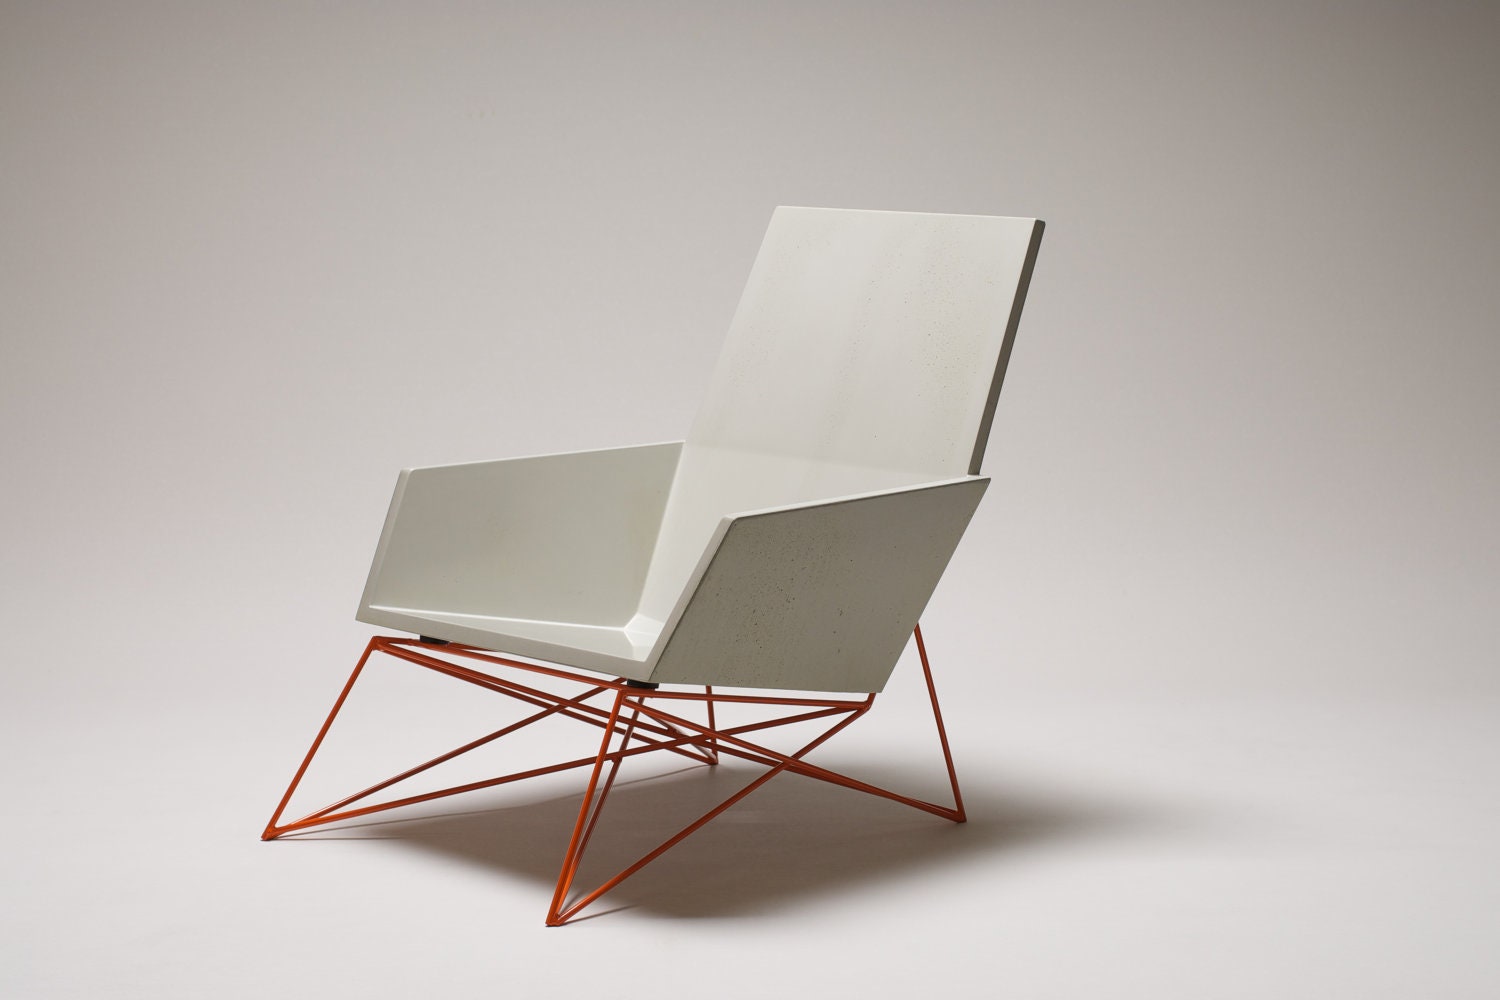 Hard Goods 'Modern Muskoka' Outdoor Chair / Concrete & Steel - HardGoodsCo